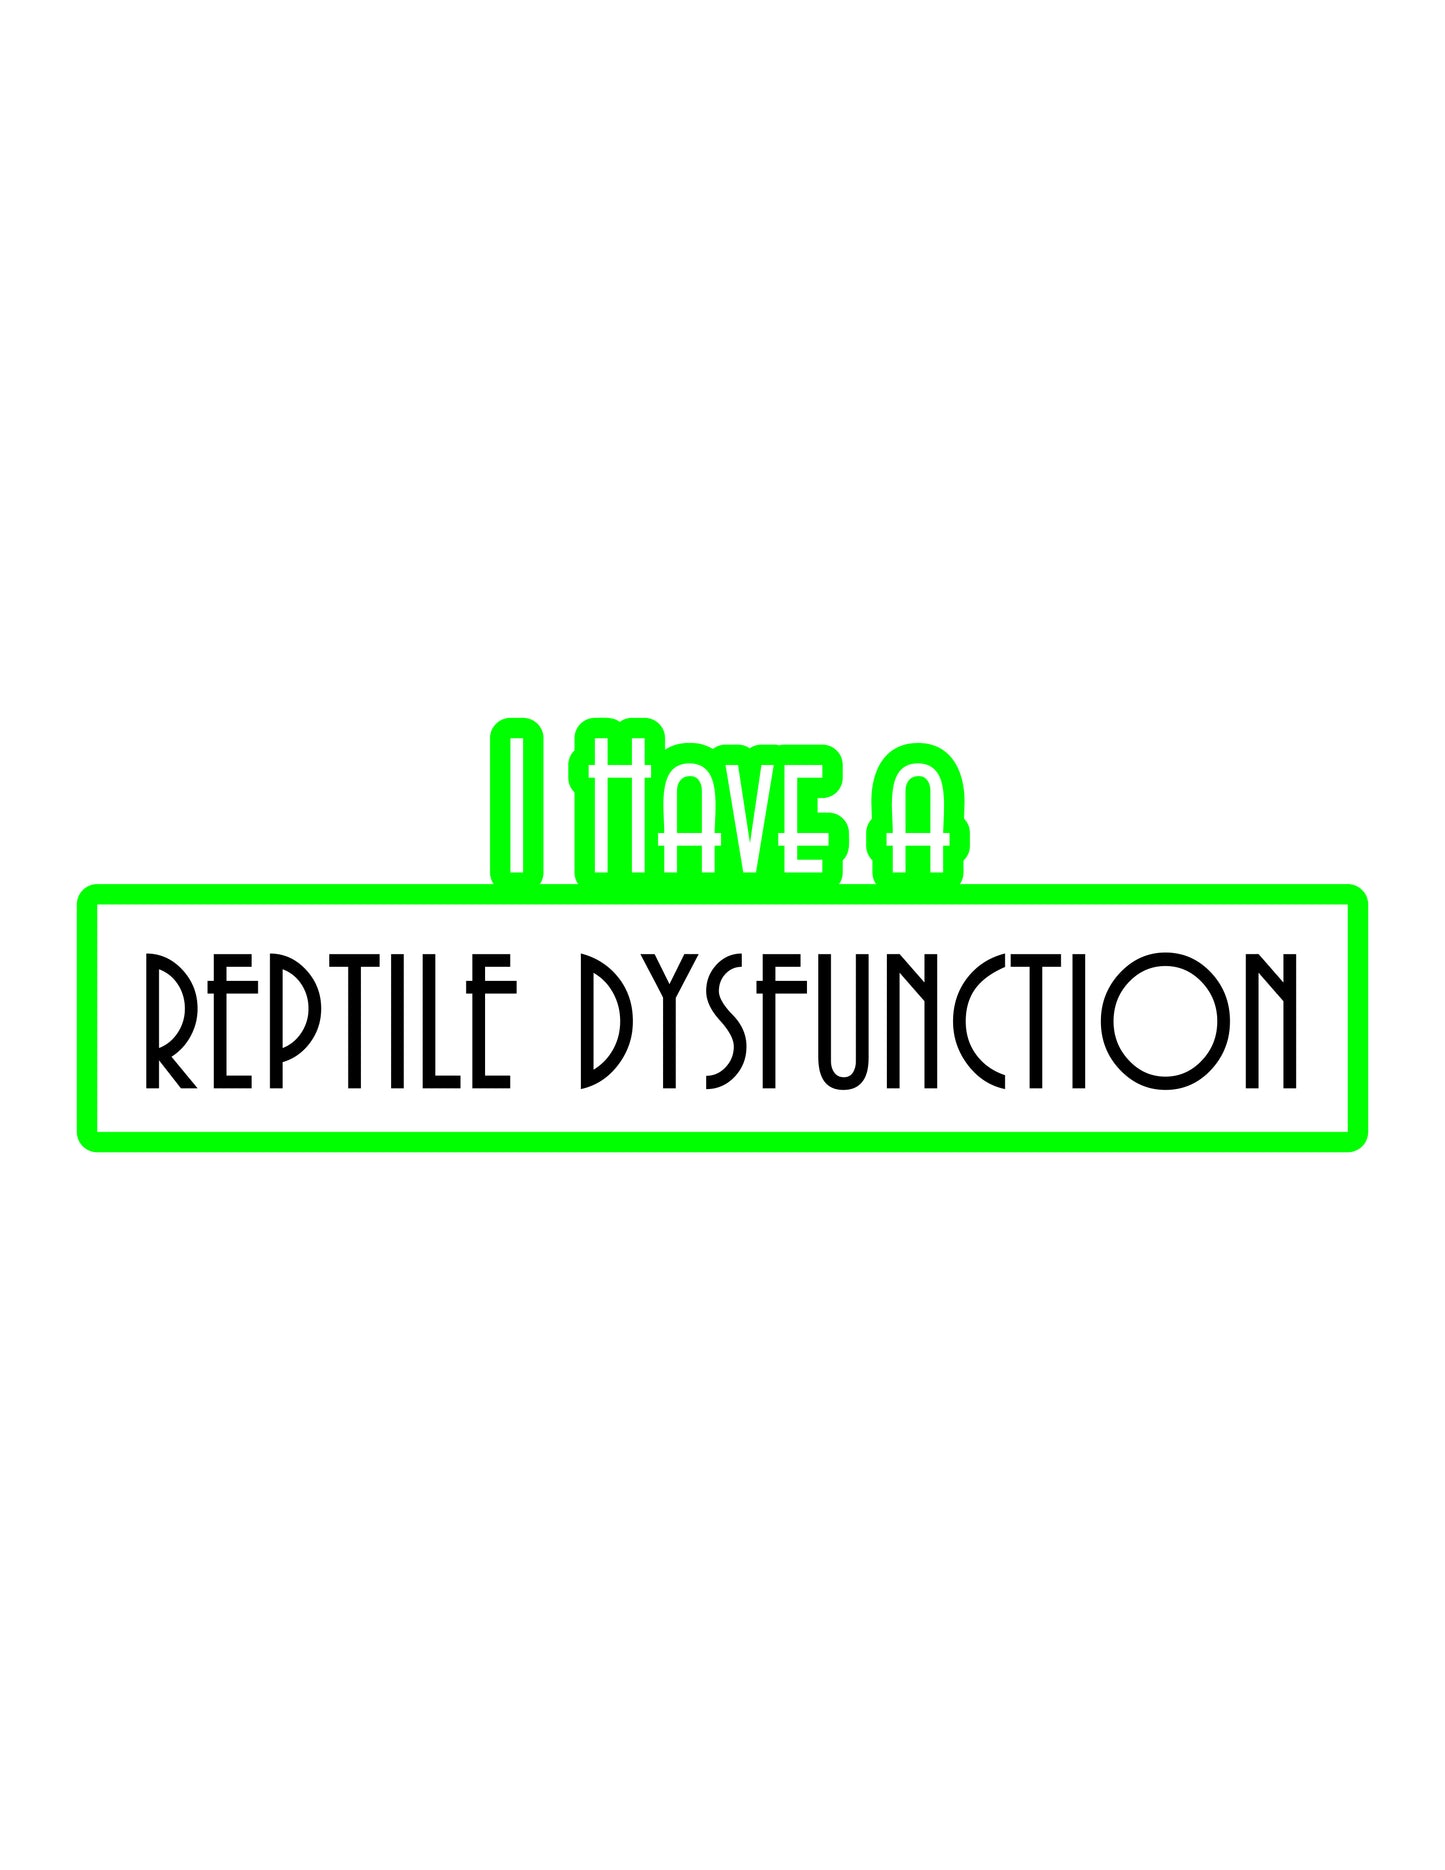 Reptile Dysfunction Green Sticker (29)